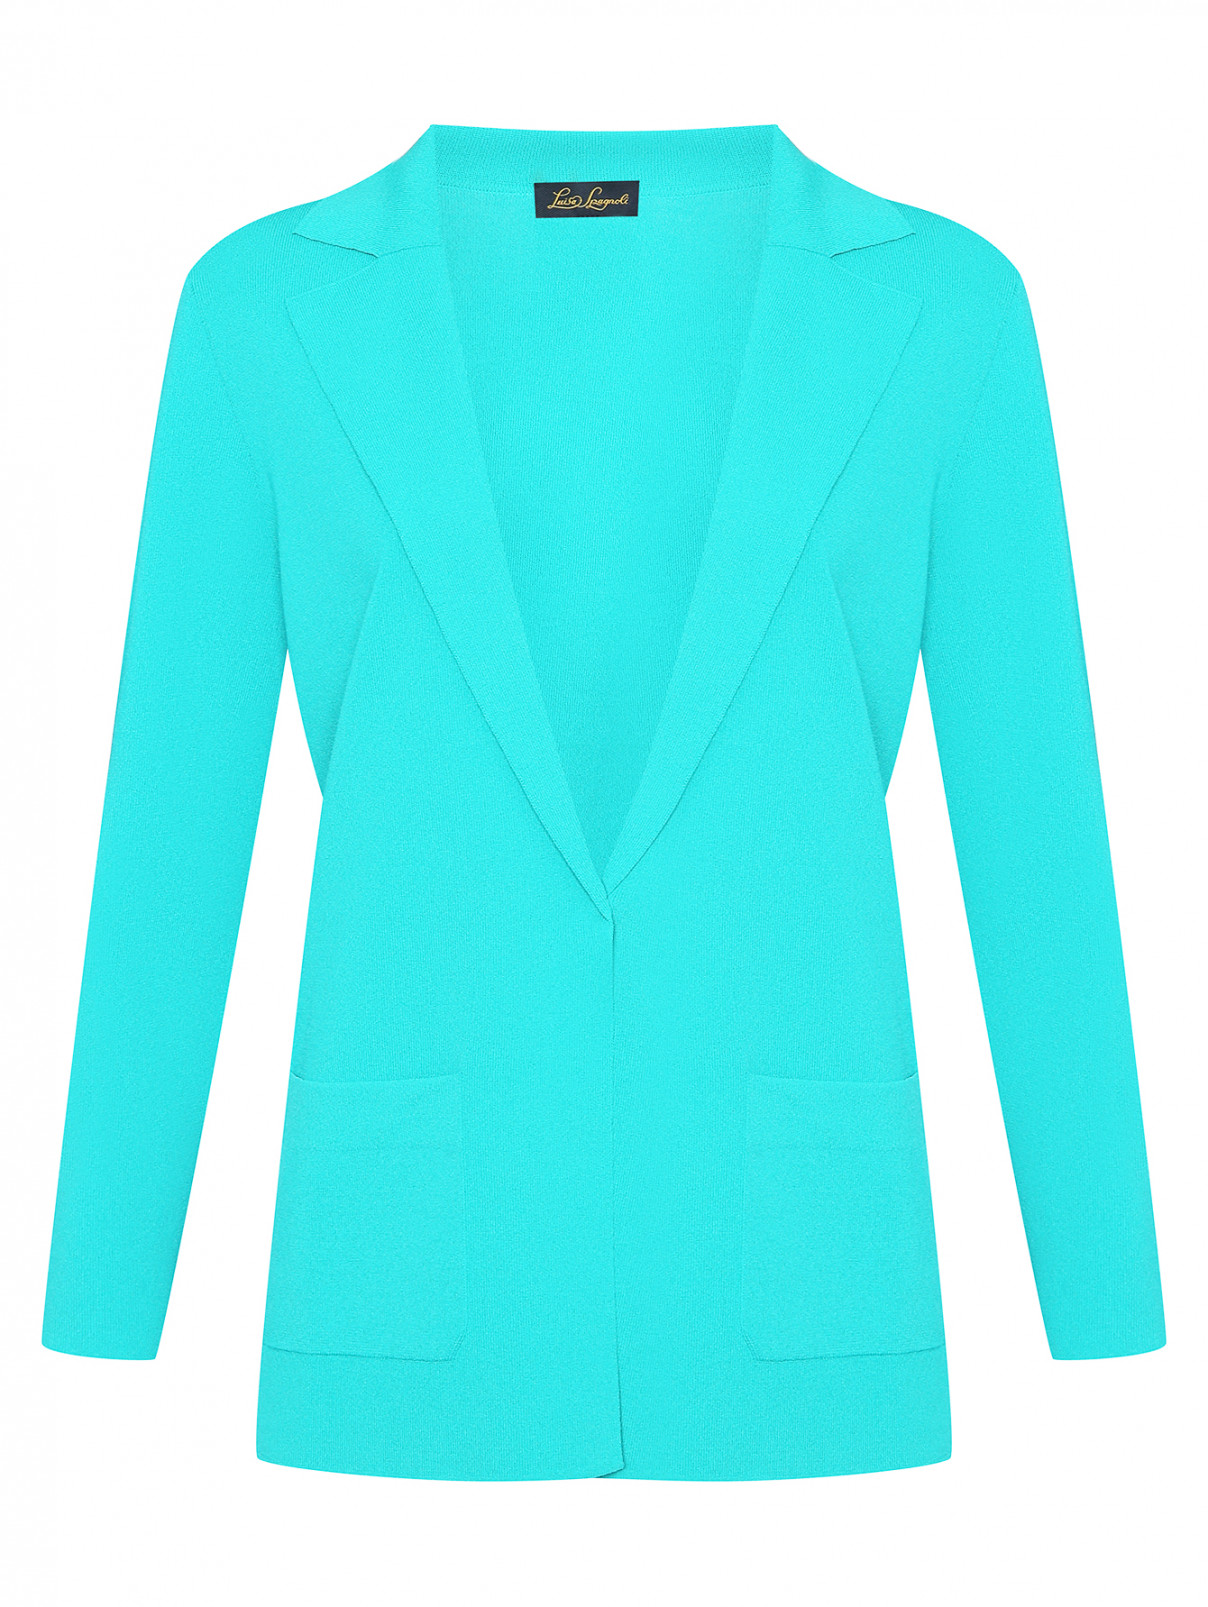 Кардиган с накладными карманами Luisa Spagnoli  –  Общий вид  – Цвет:  Синий